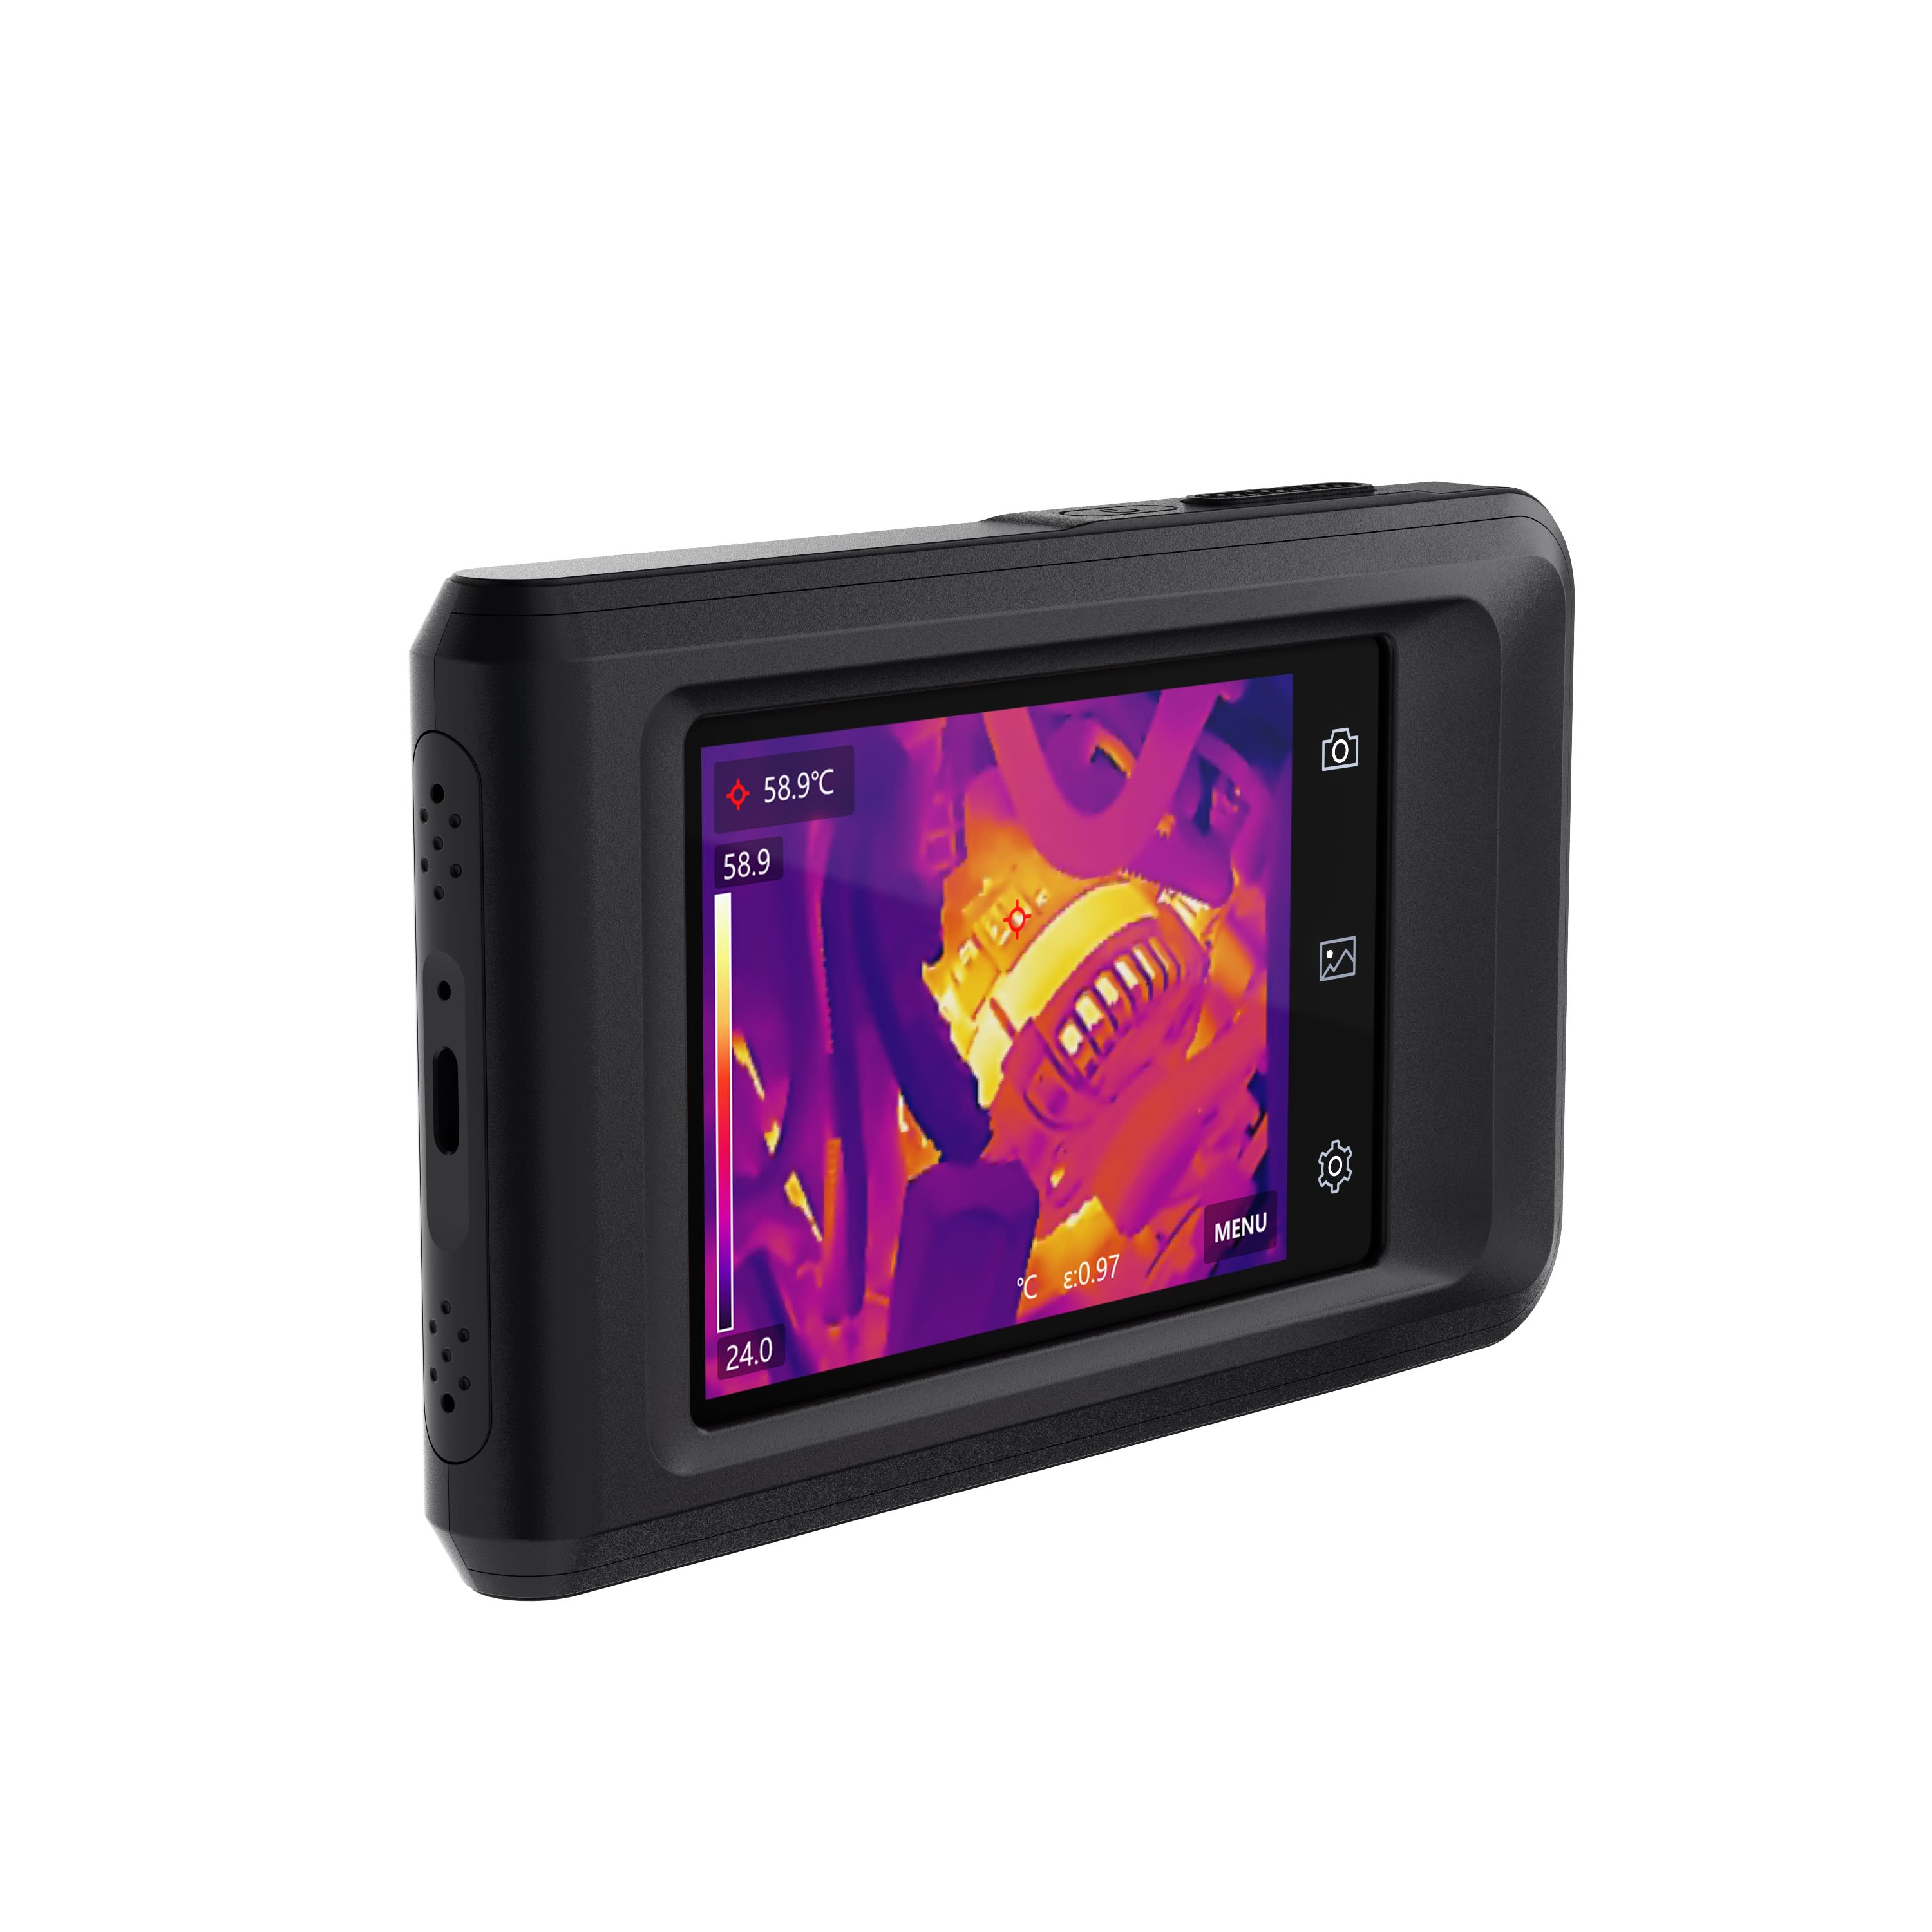 Elma Instruments - HIK Pocket2 kompakt termografikamera
256x192pixel, -20~400°C